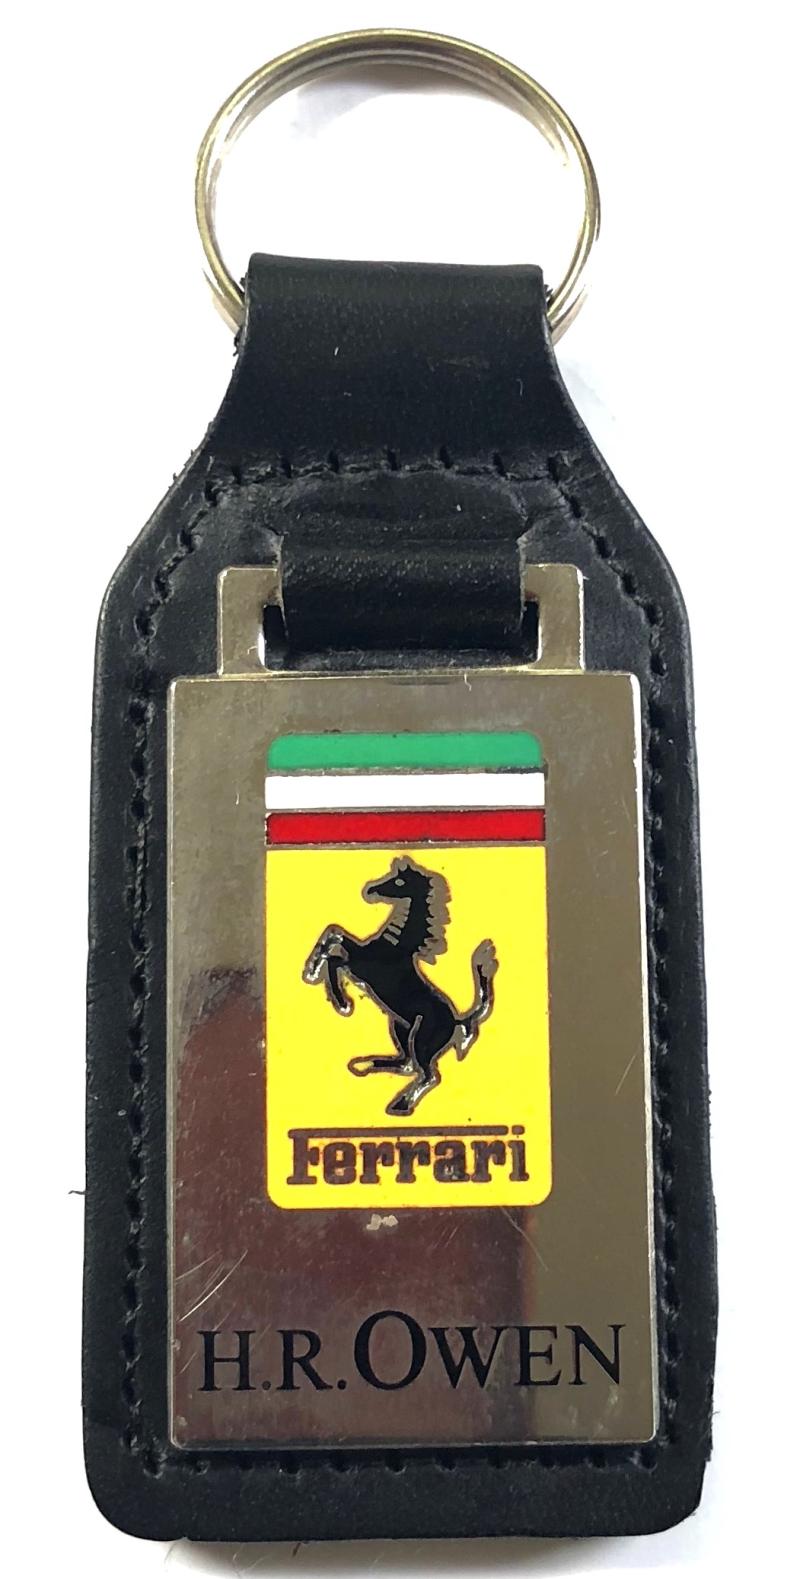 Ferrari Sports Car rearing horse logo leather key fob badge Manhattan Windsor